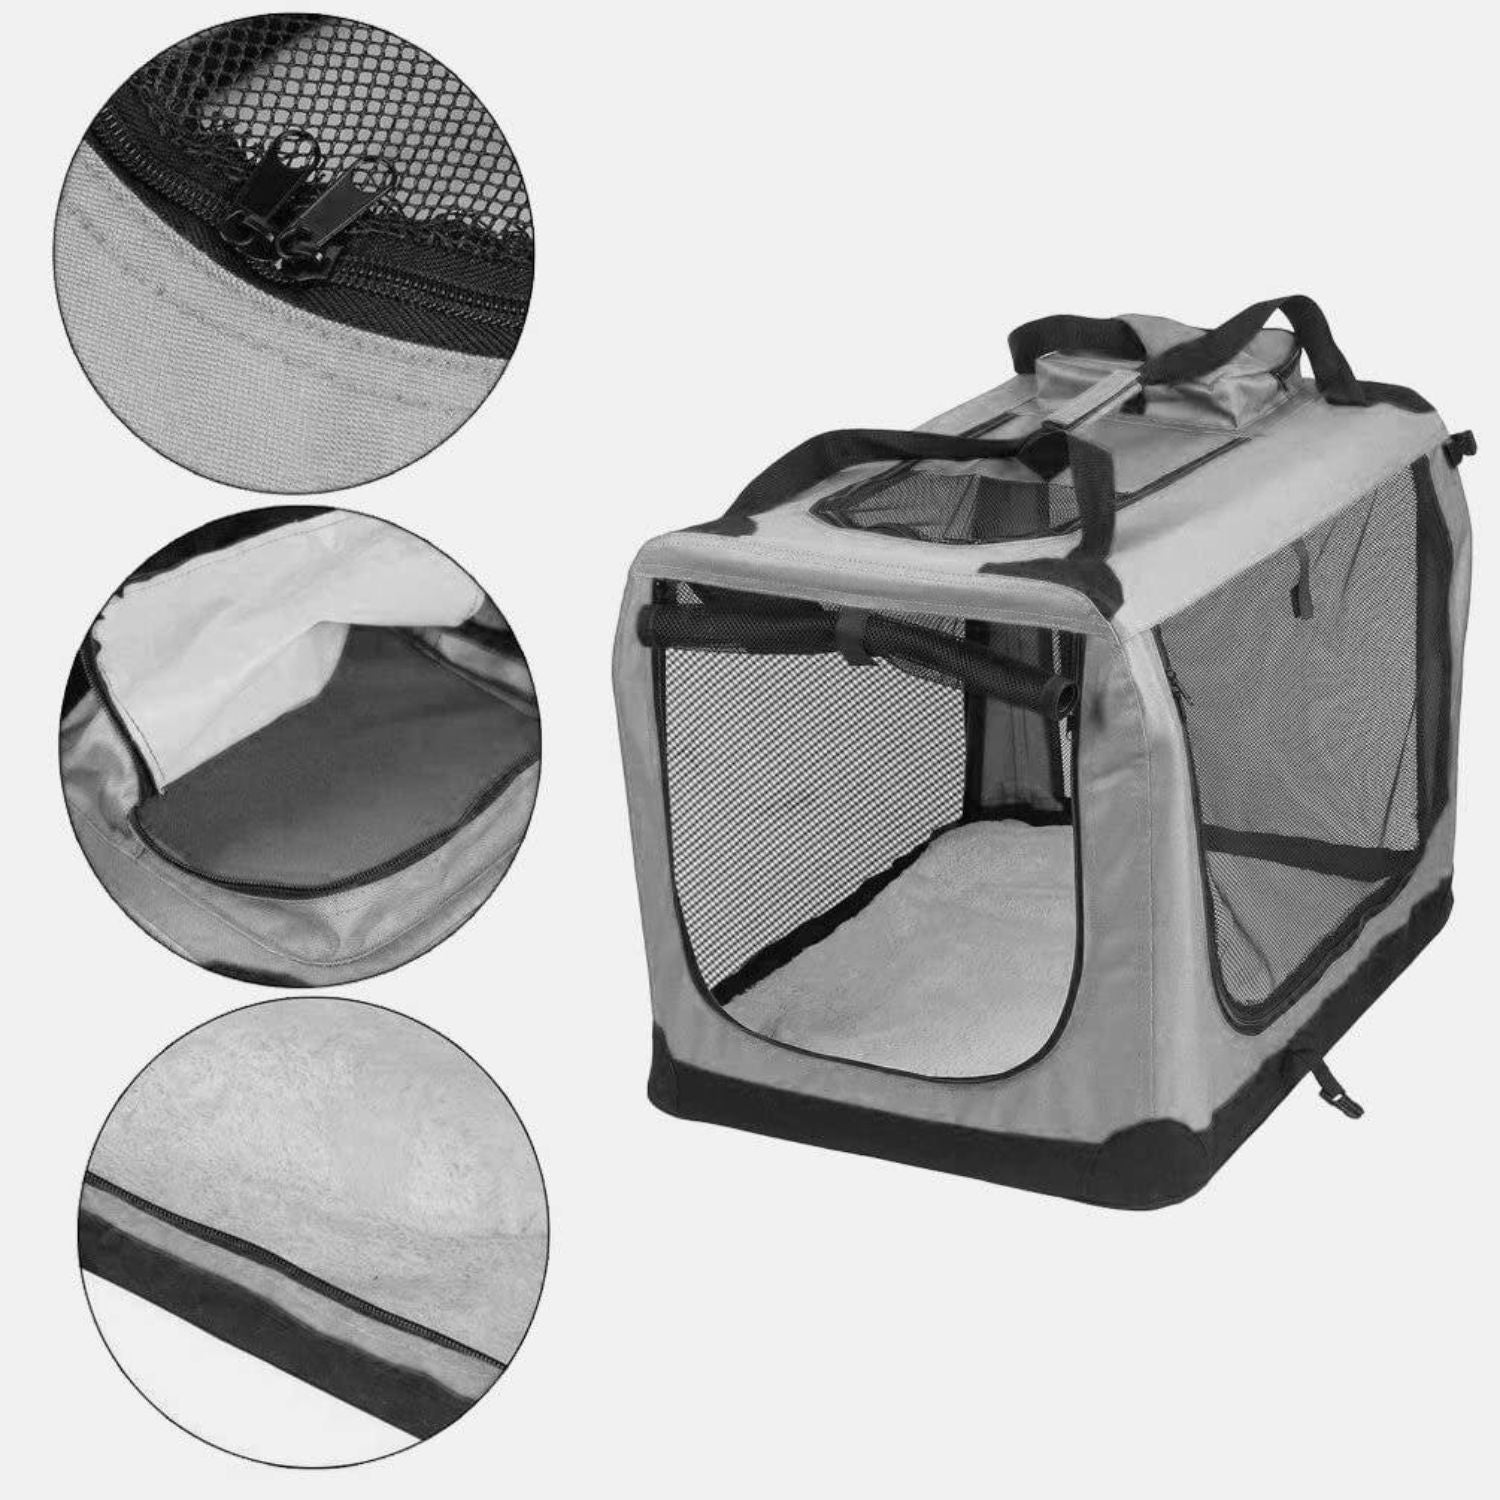 FLOOFI Portable Pet Carrier-Model 1-XL Size (Grey)